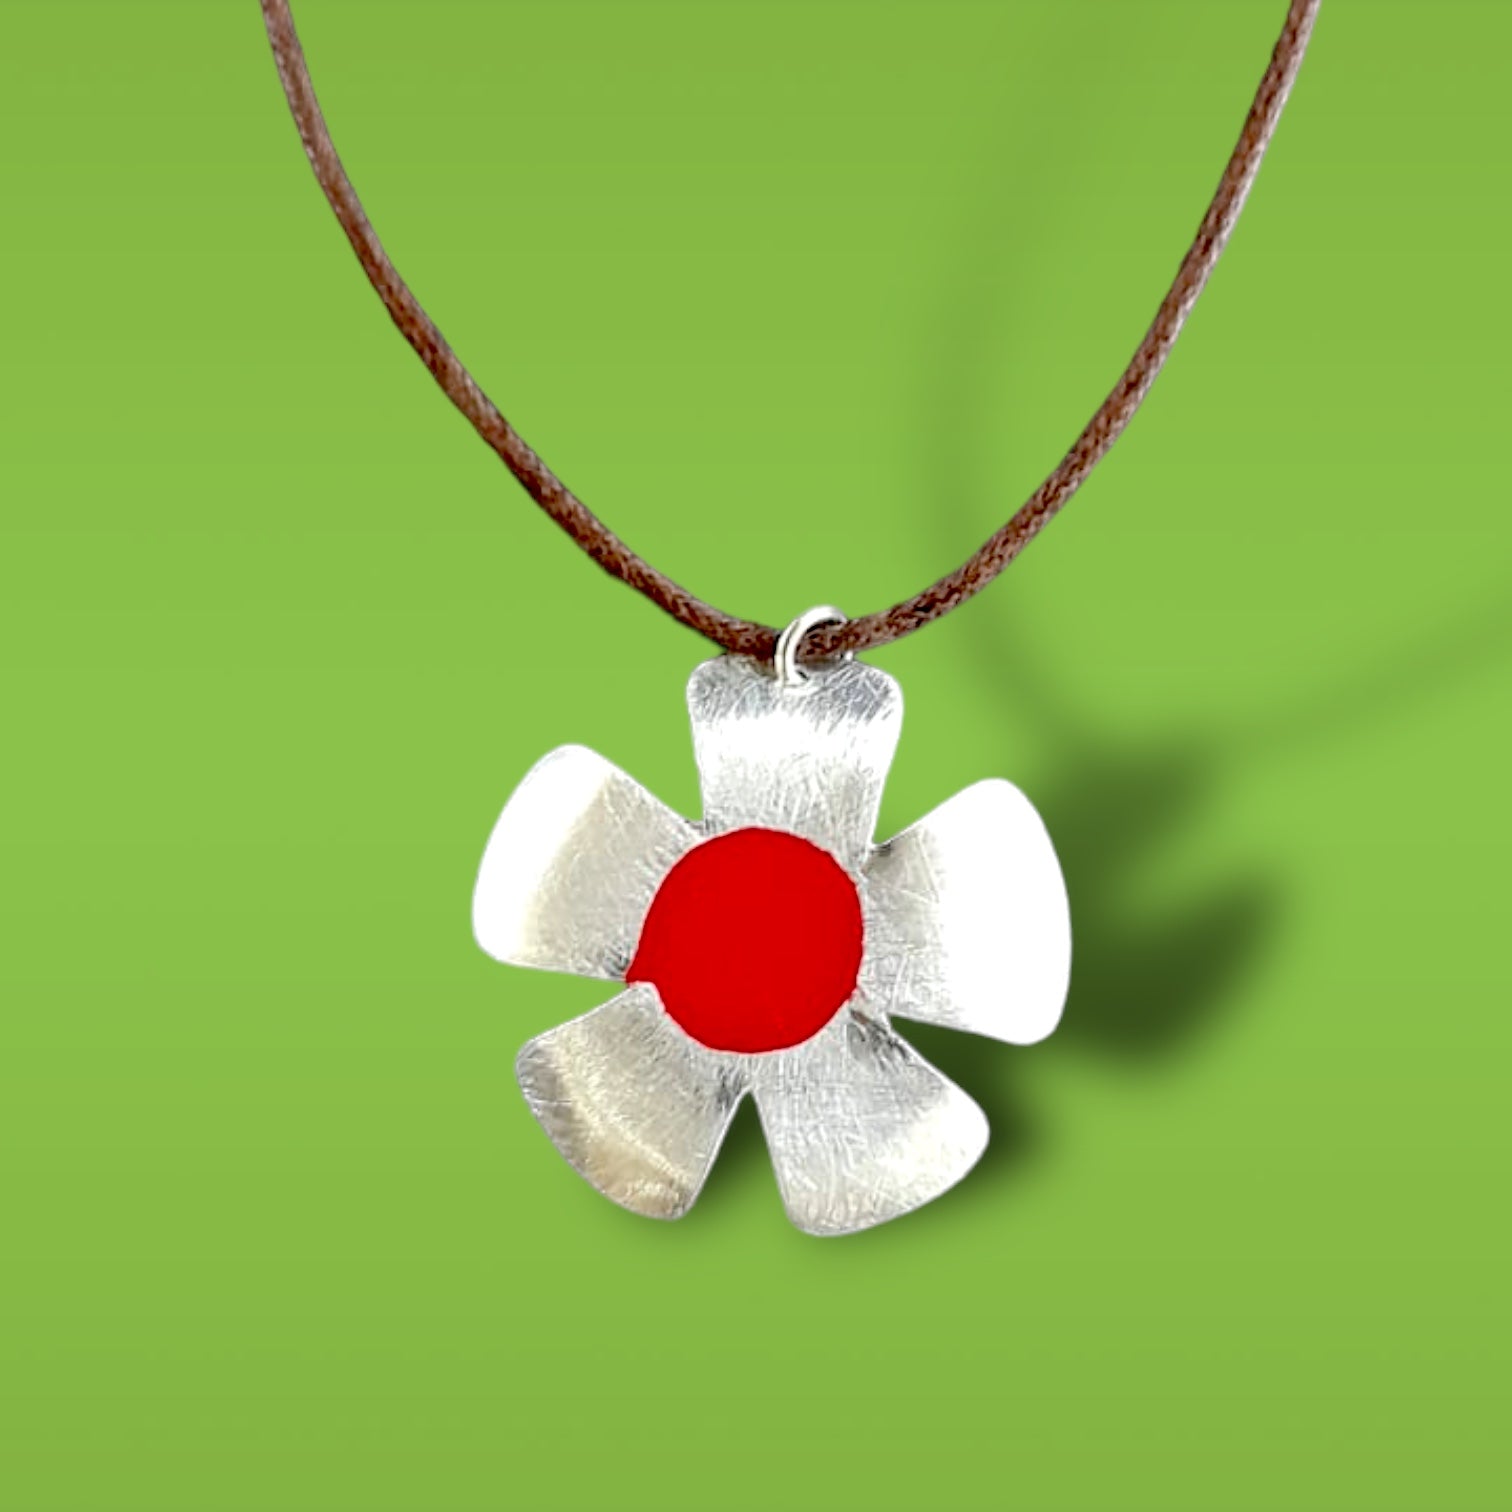 YATZIRI Adjustable Flower Necklace